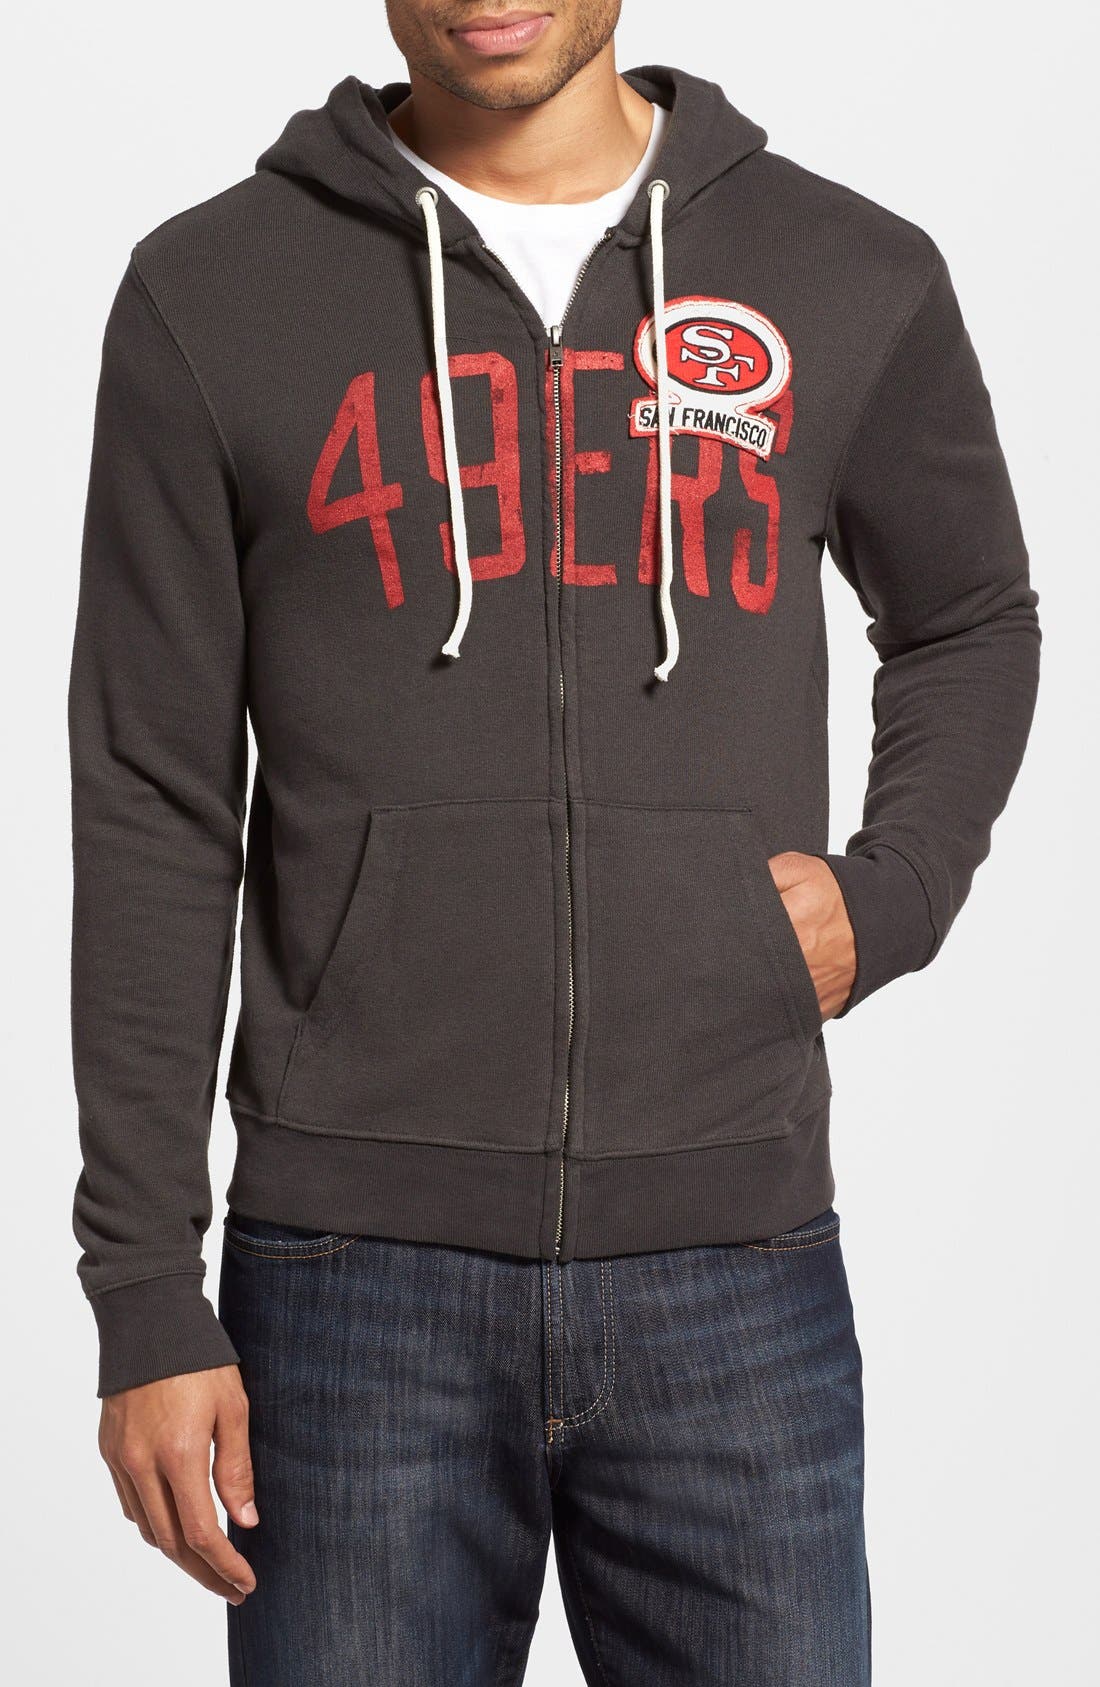 49ers zipper hoodie